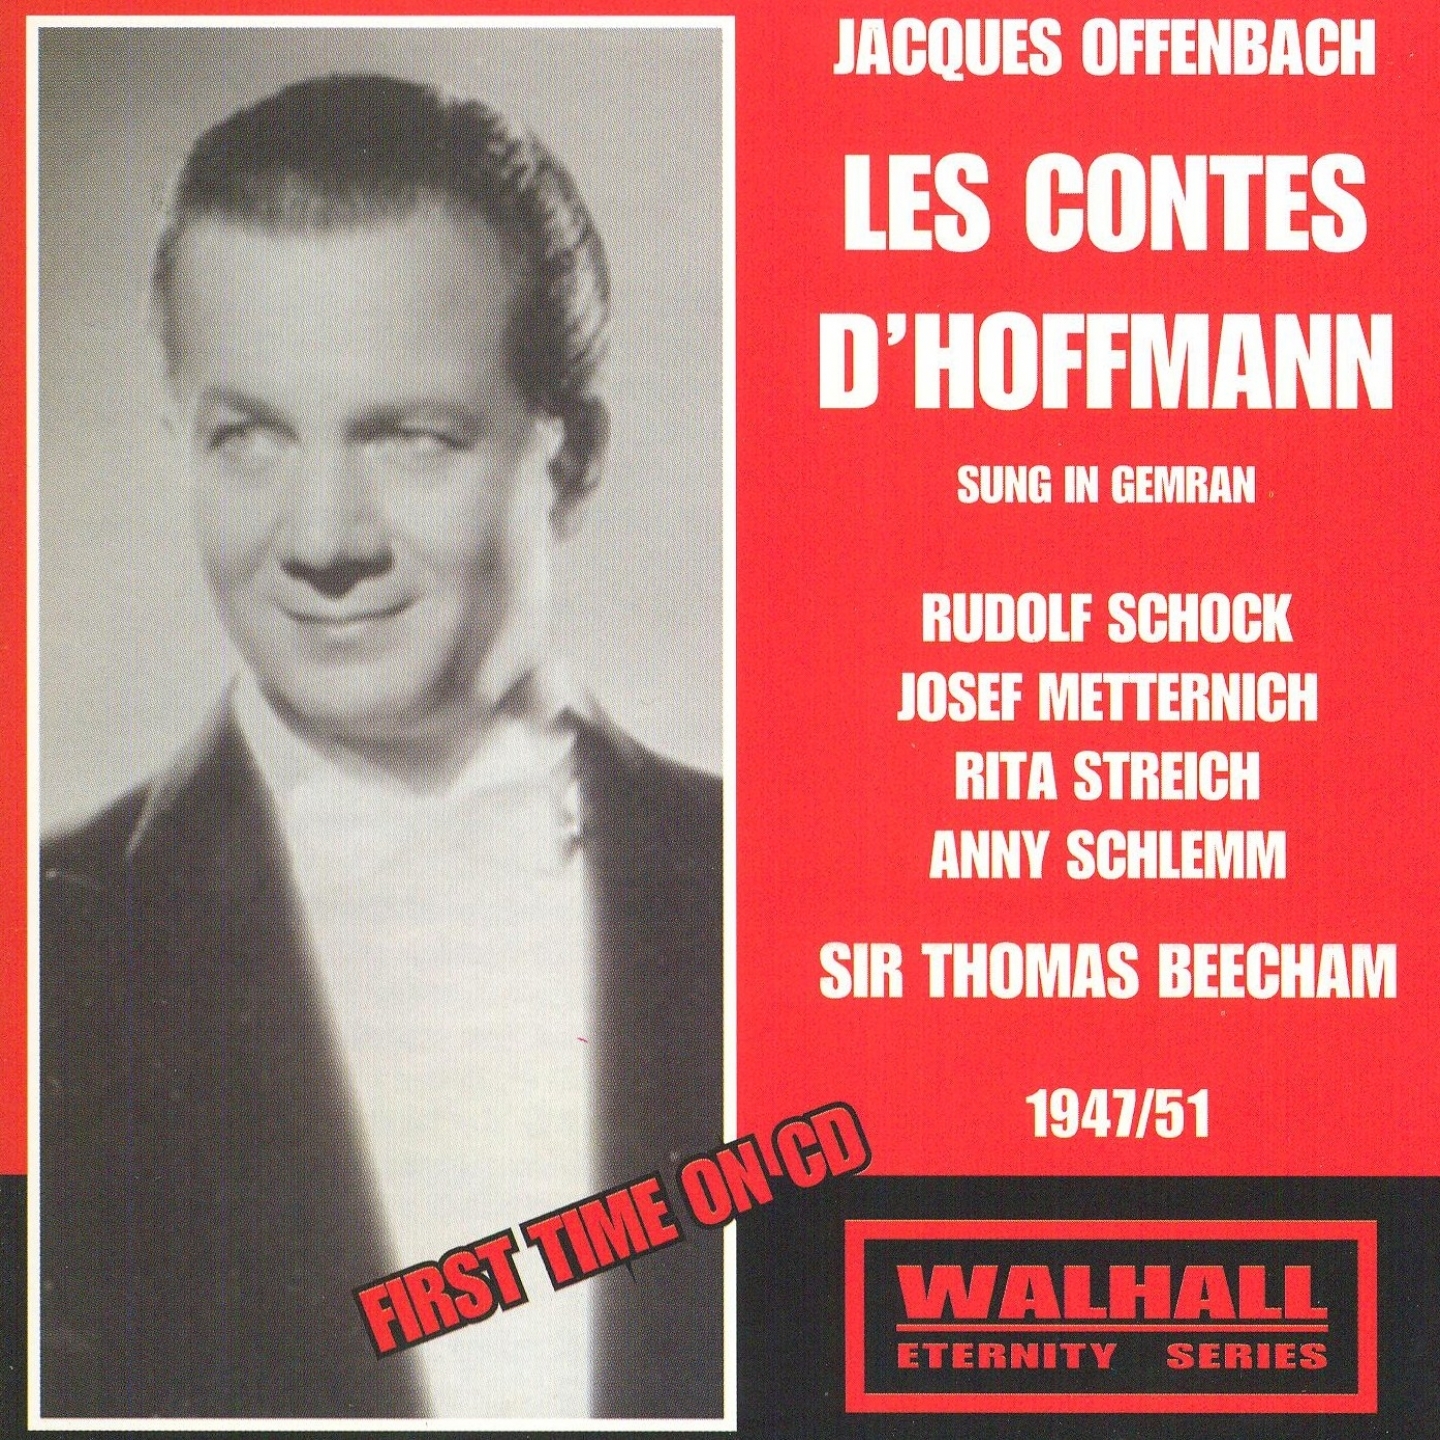 Les Contes D'Hoffmann: Act 2 - Schlemith!